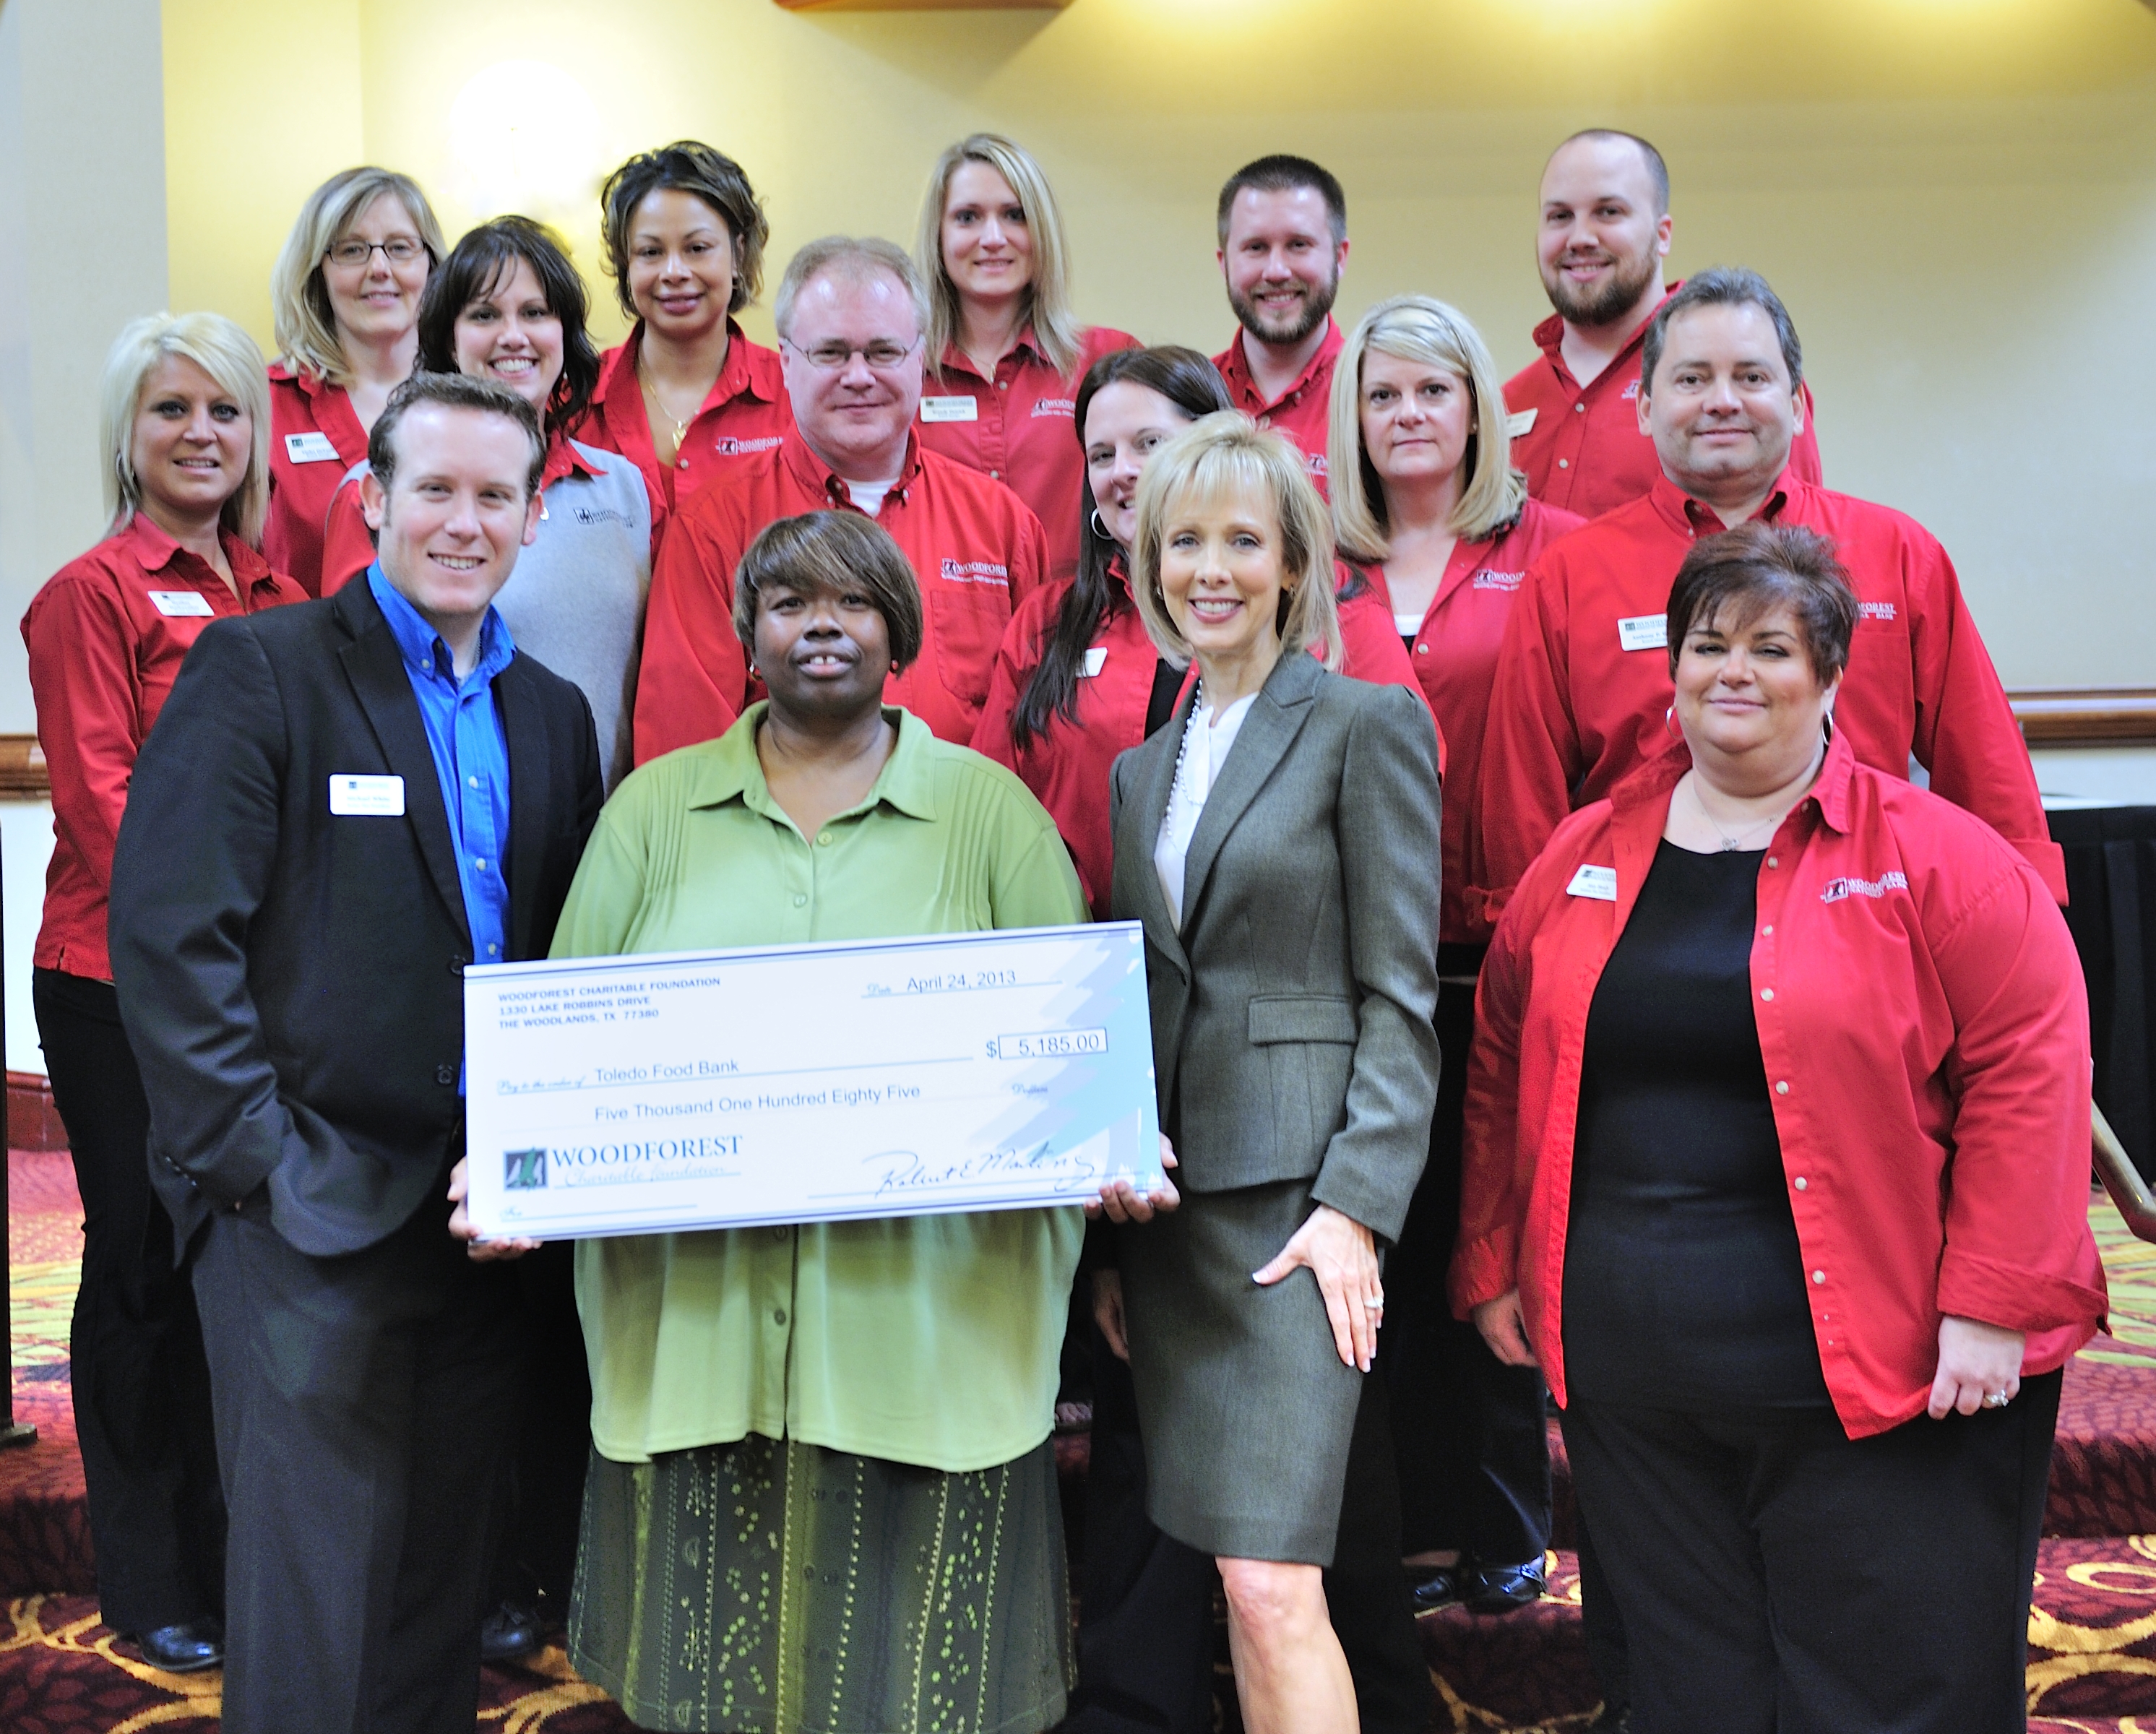 Toledo Northwestern Ohio Food Bank receives $5,185 from Woodforest Charitable Foundation.